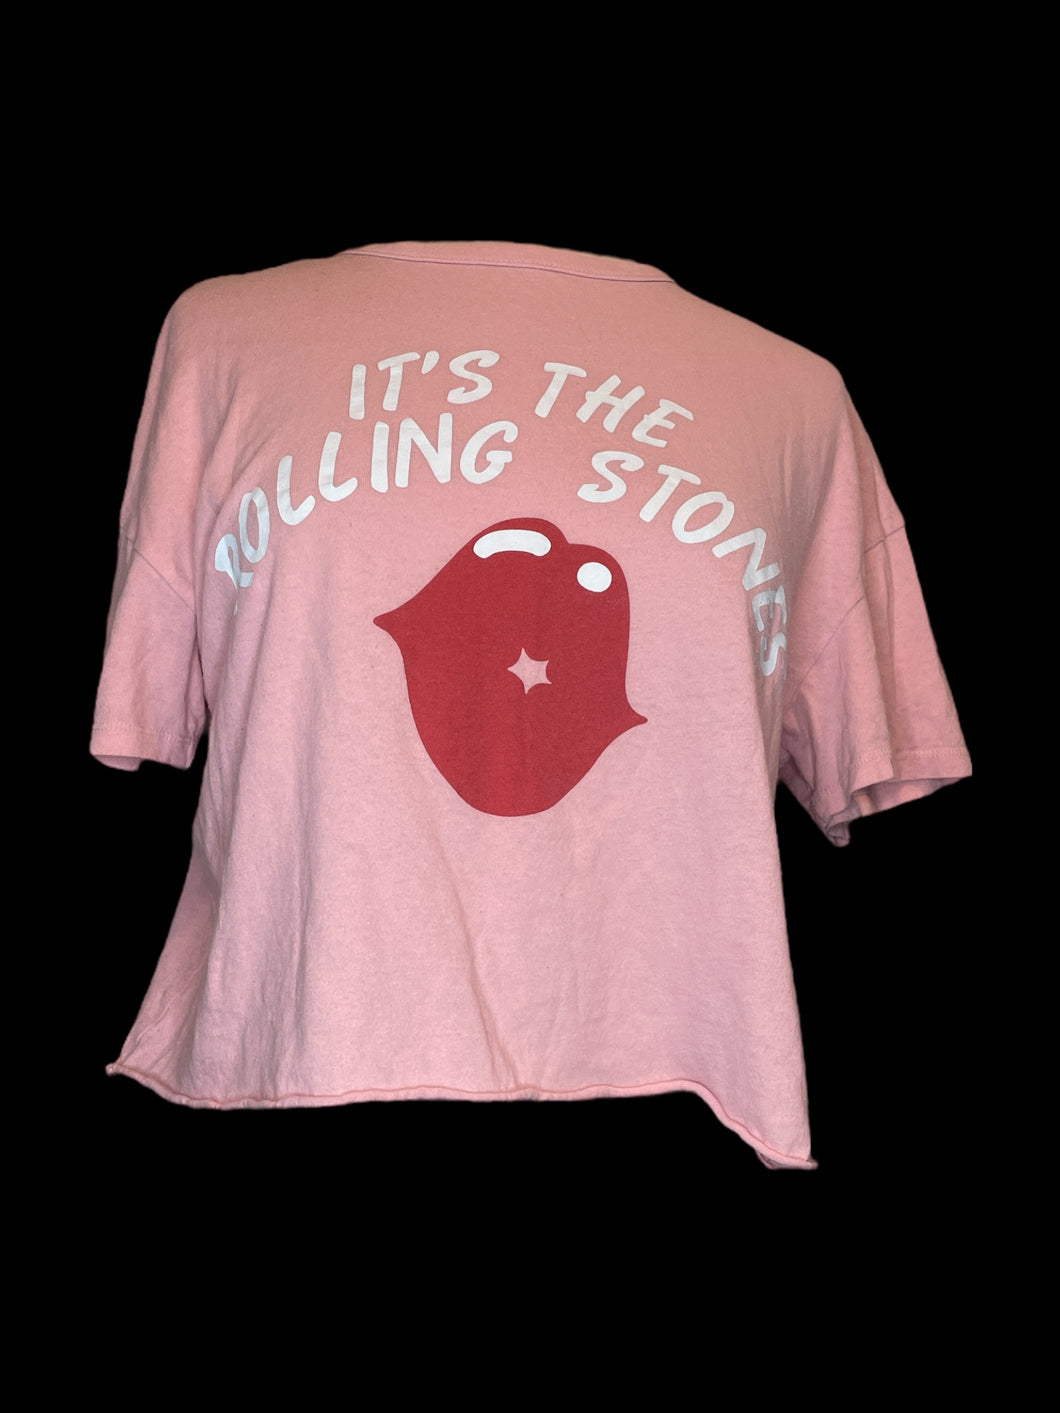 L Pink cropped tee shirt w/ 